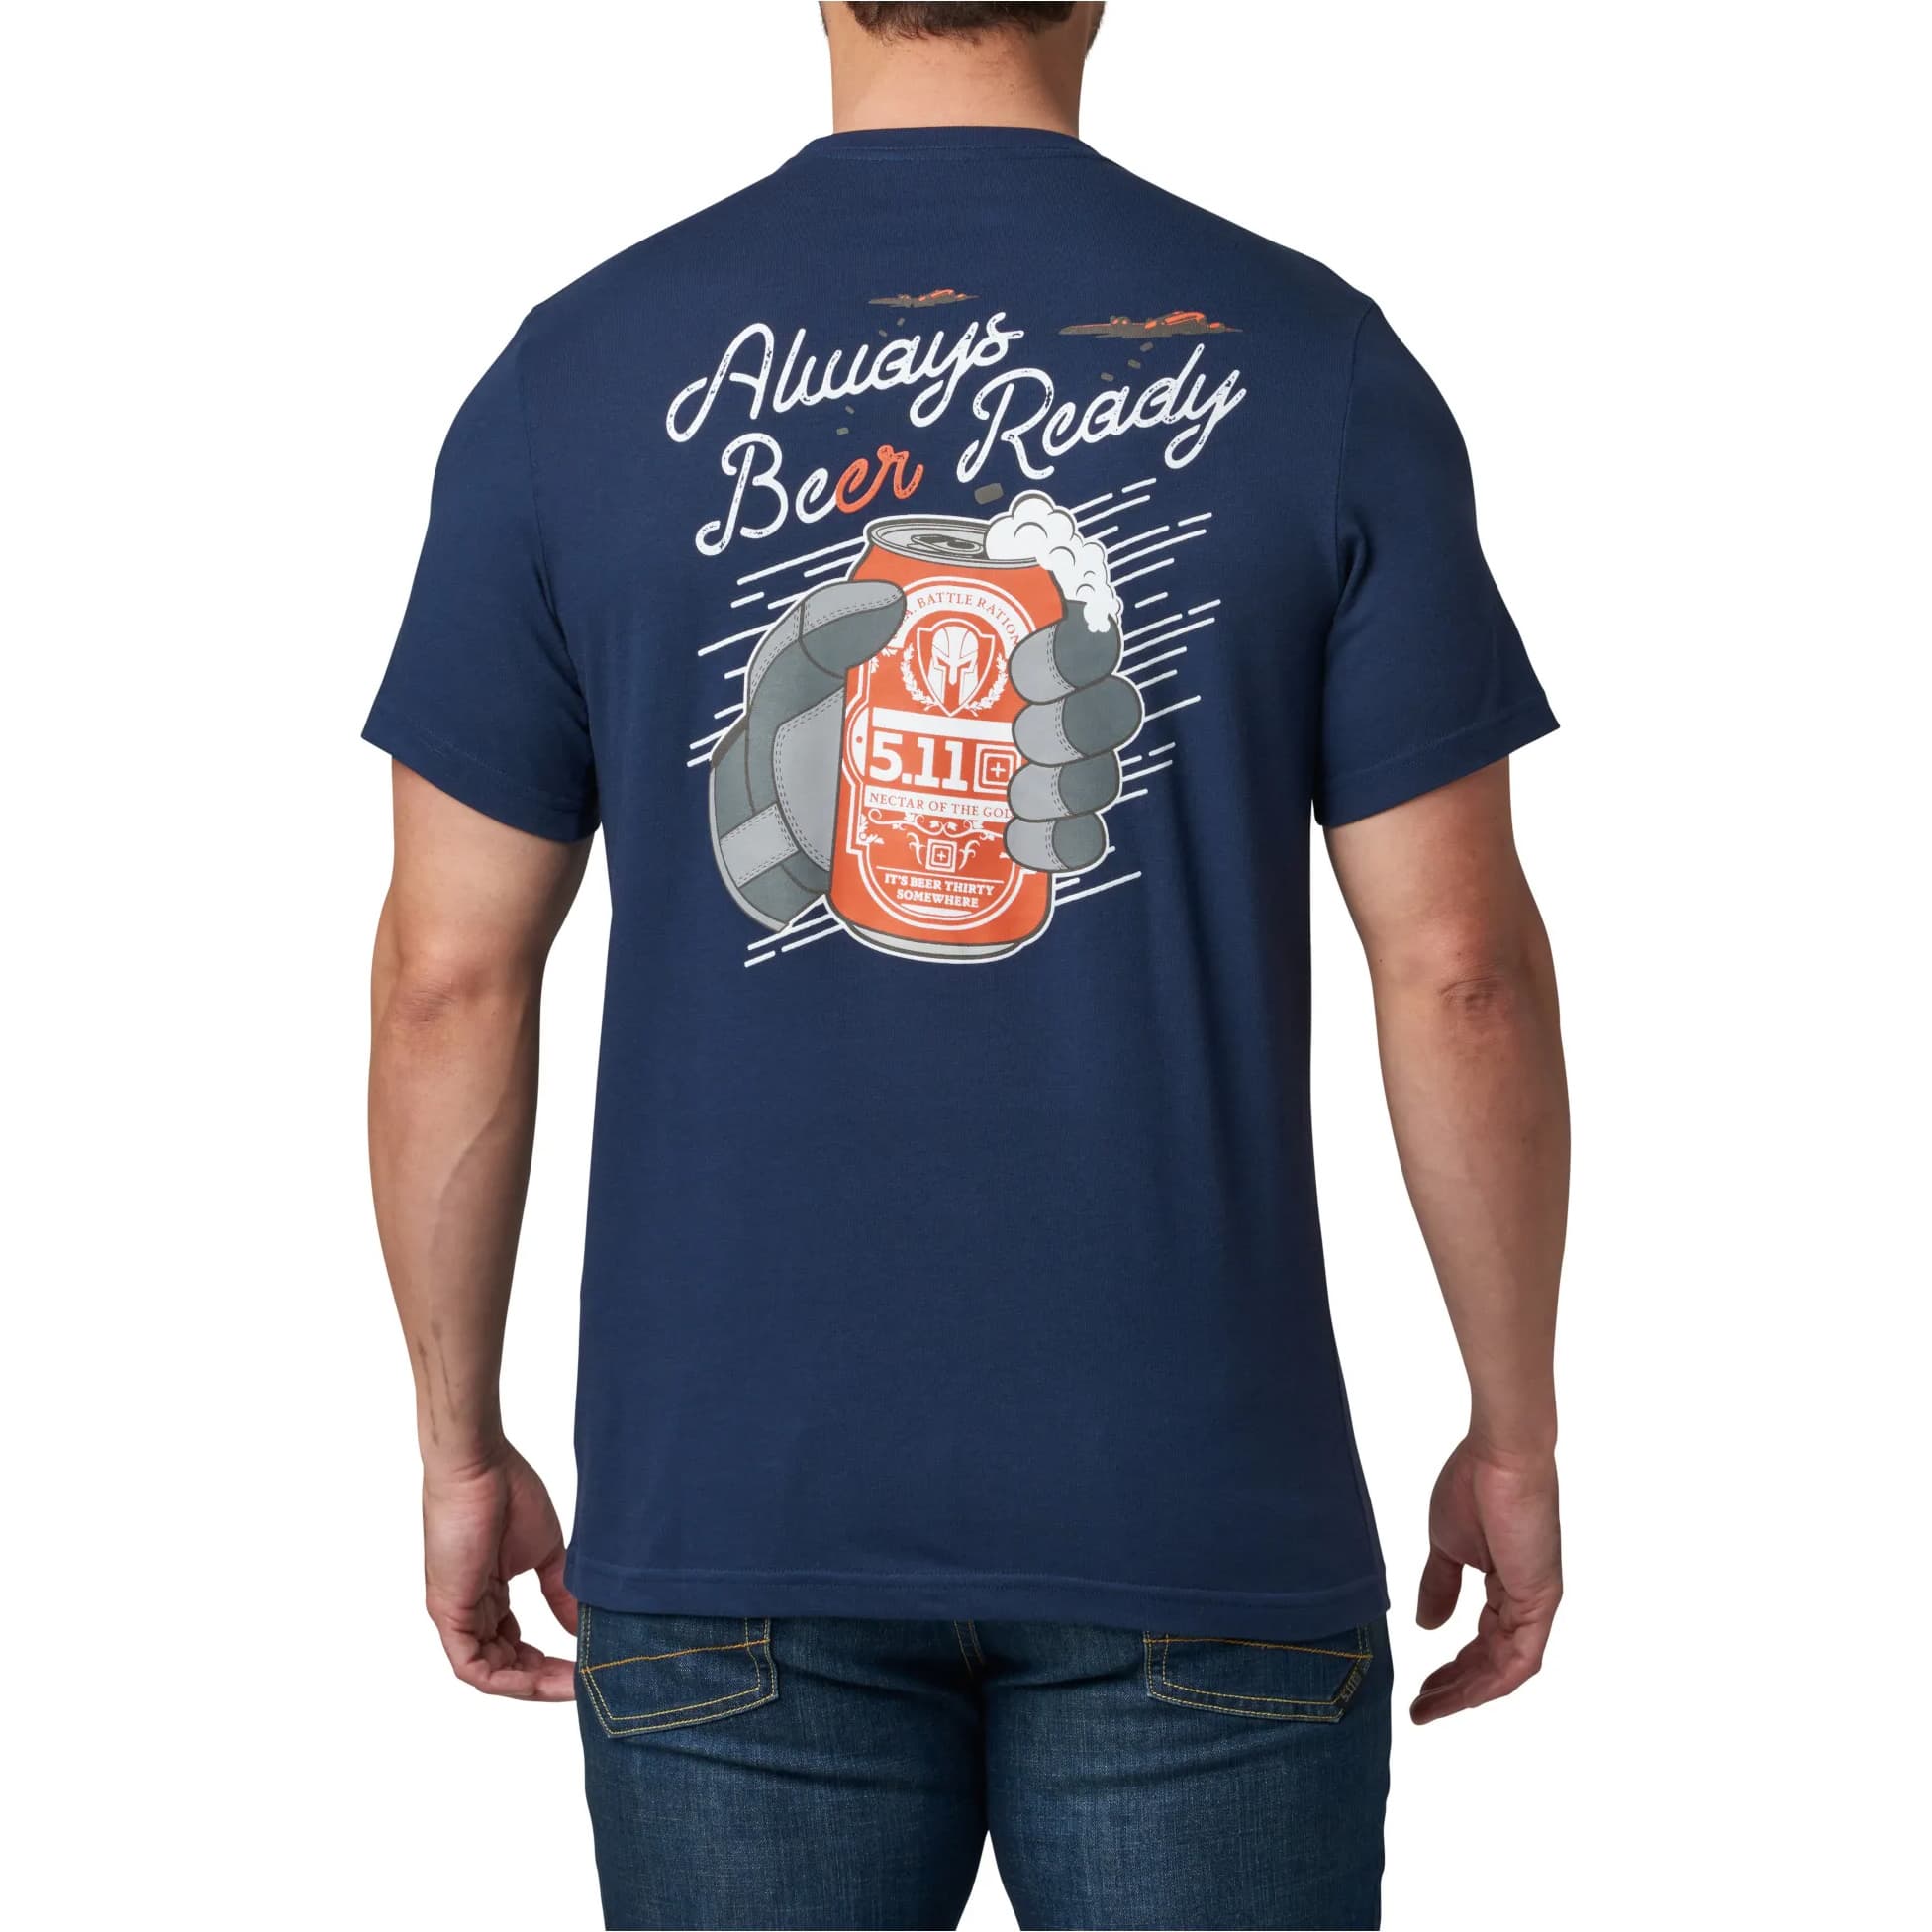 5.11® Men’s Always Beer Ready Short-Sleeve T-Shirt